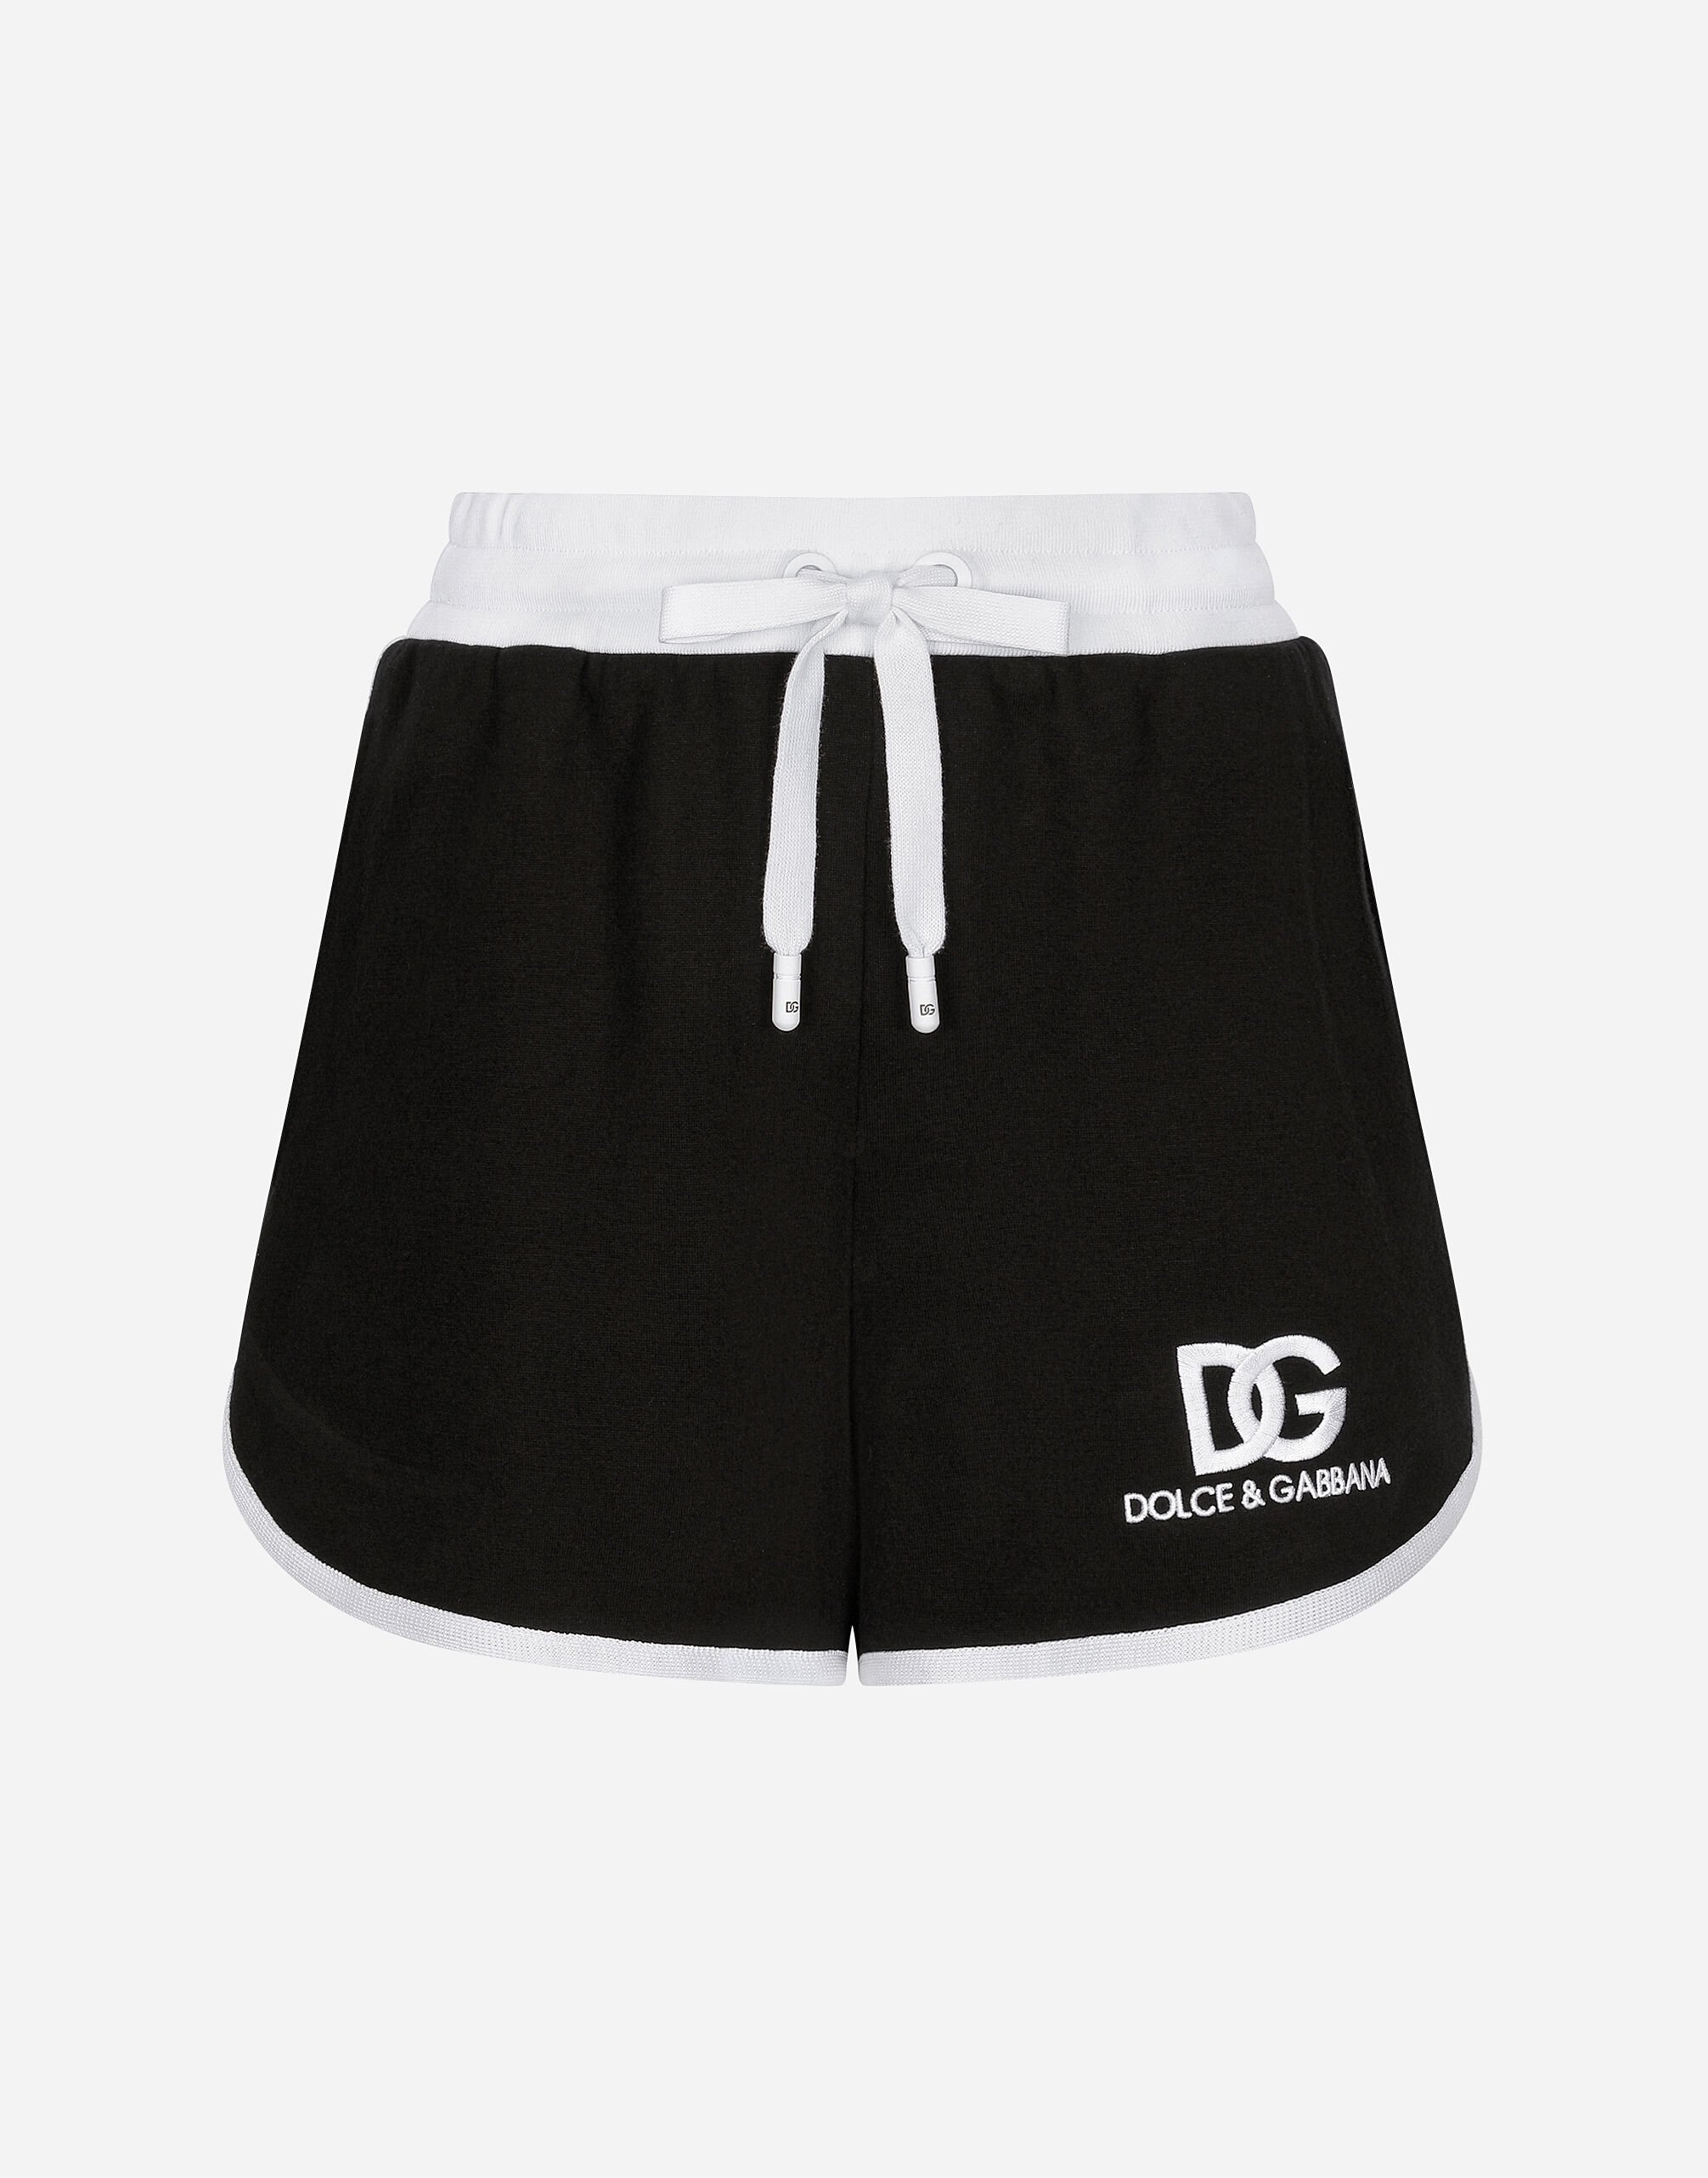 Dolce&Gabbana Jersey shorts with DG logo embroidery Black F79BRTHLM9K